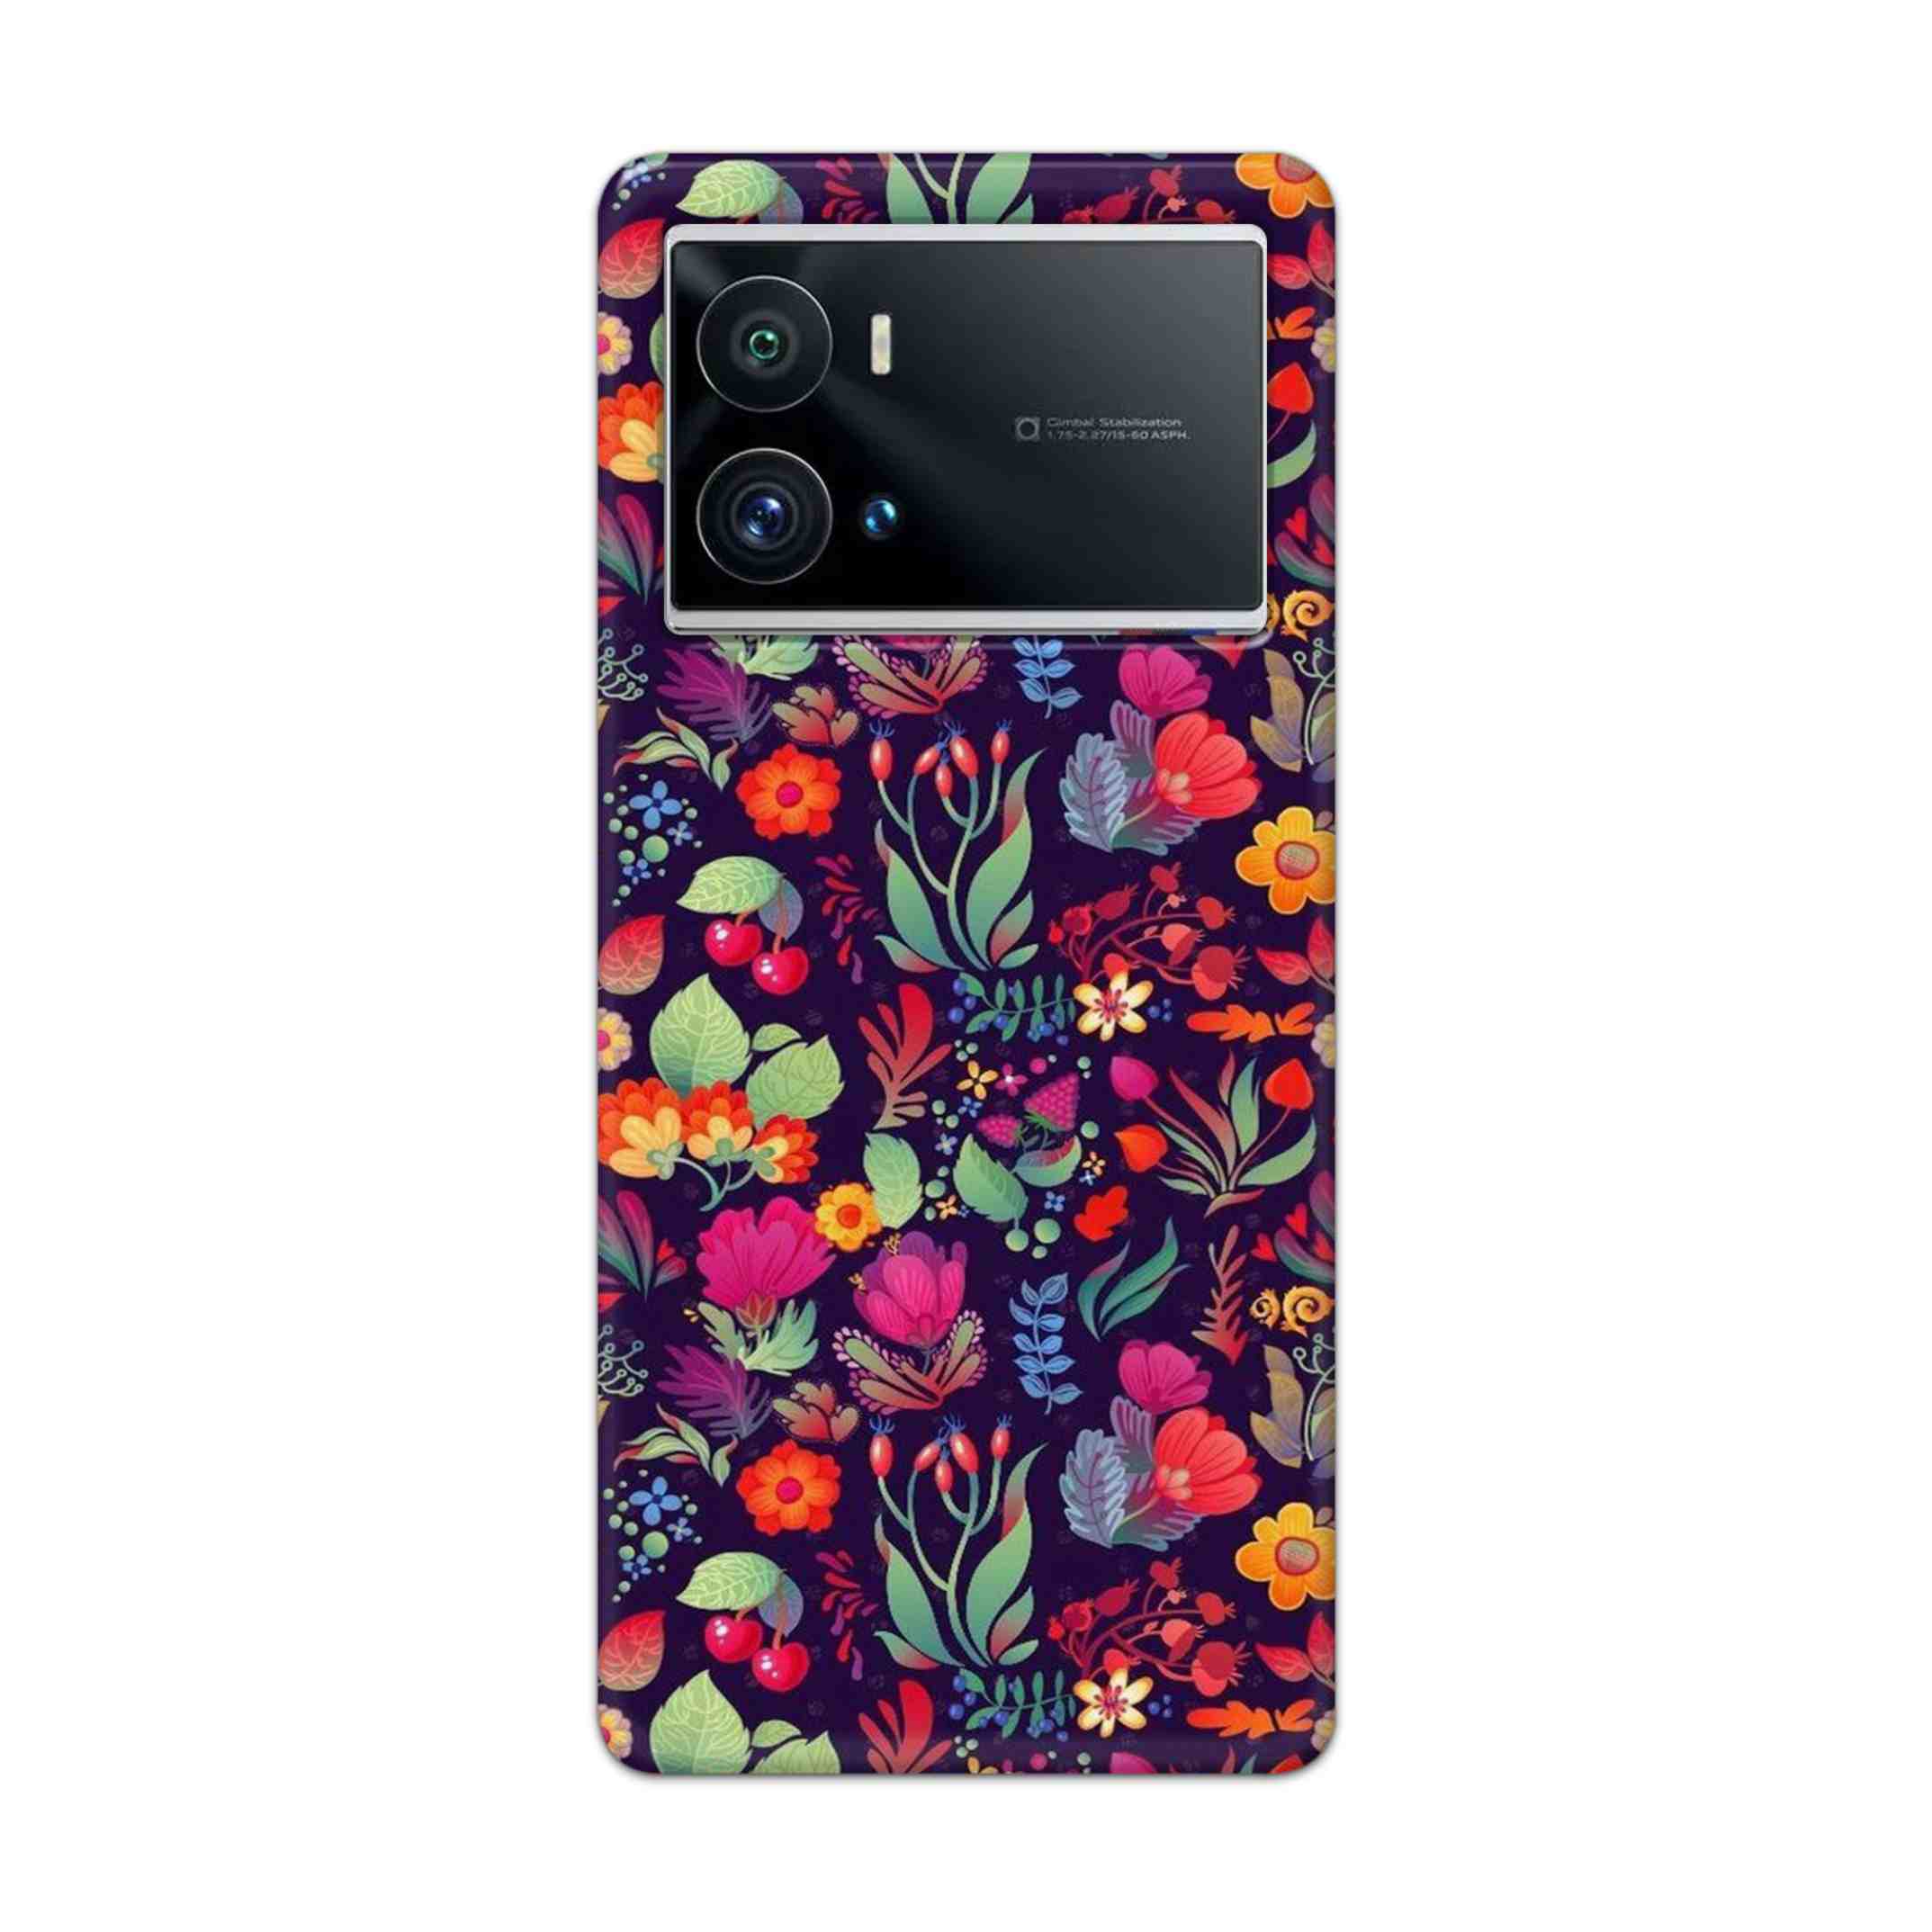 Buy Fruits Flower Hard Back Mobile Phone Case Cover For iQOO 9 Pro 5G Online